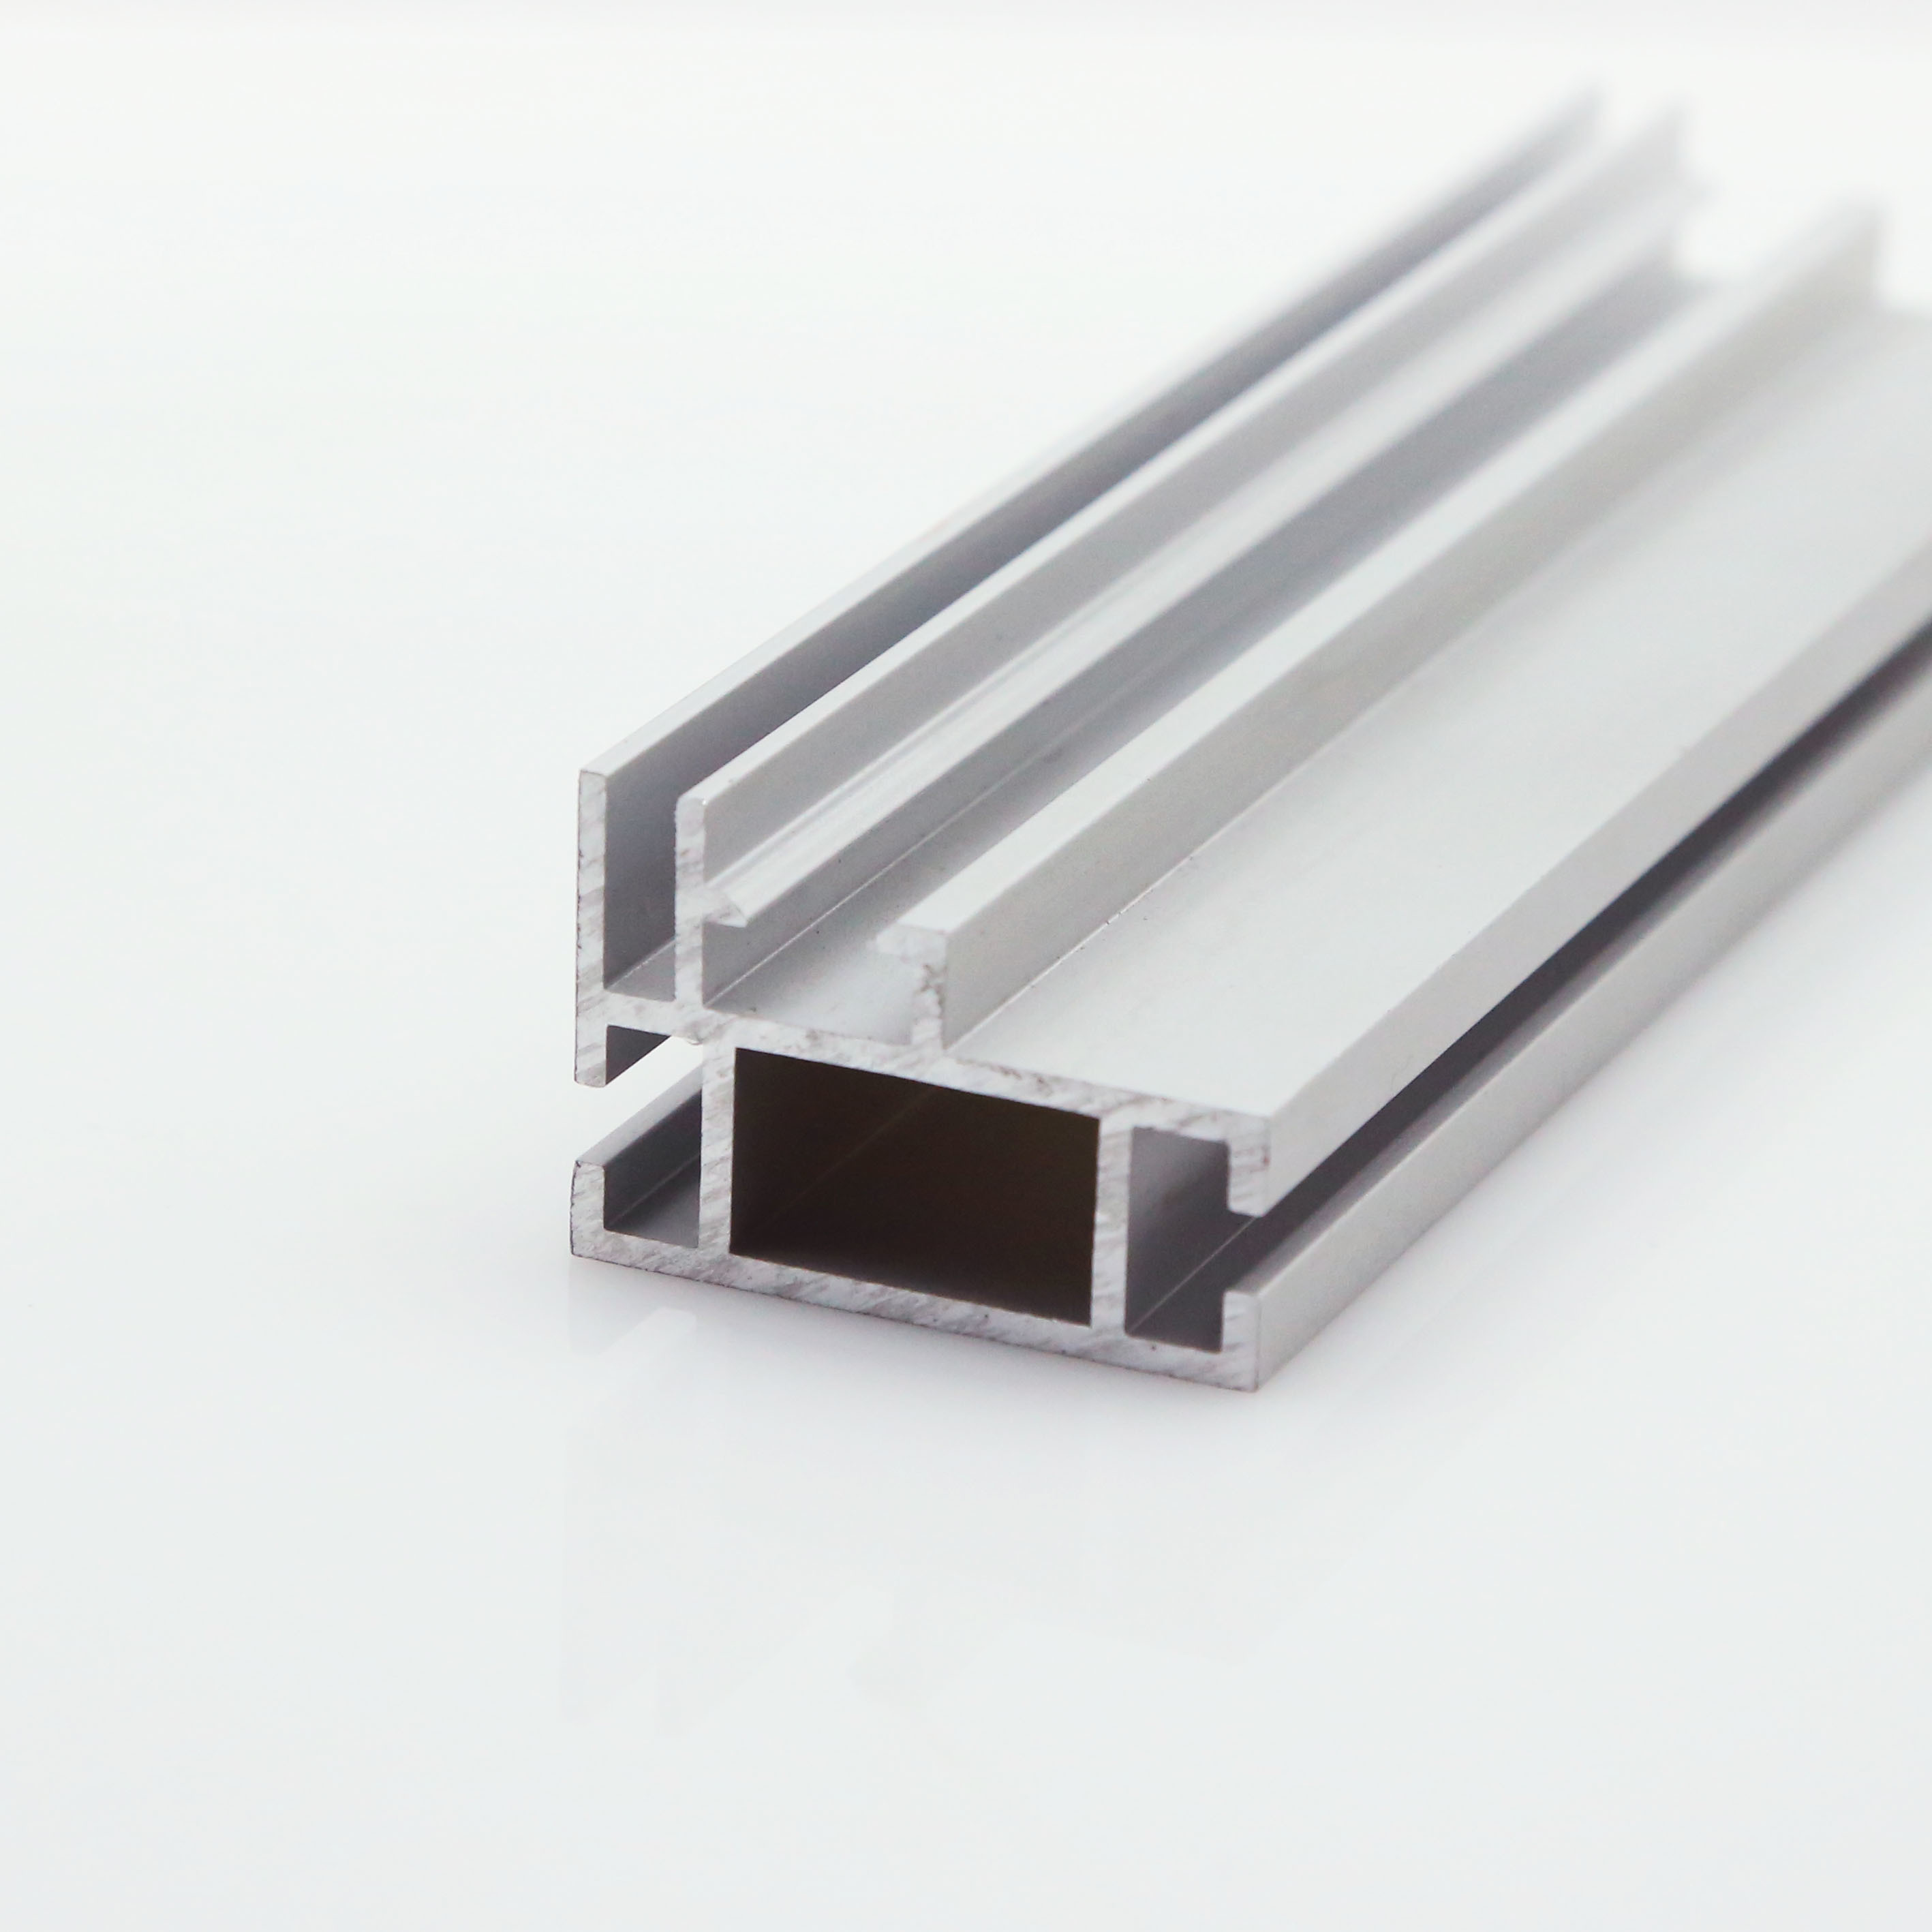 Single Sided Tension Fabric Frame for LED Lightbox Display (KS-08)